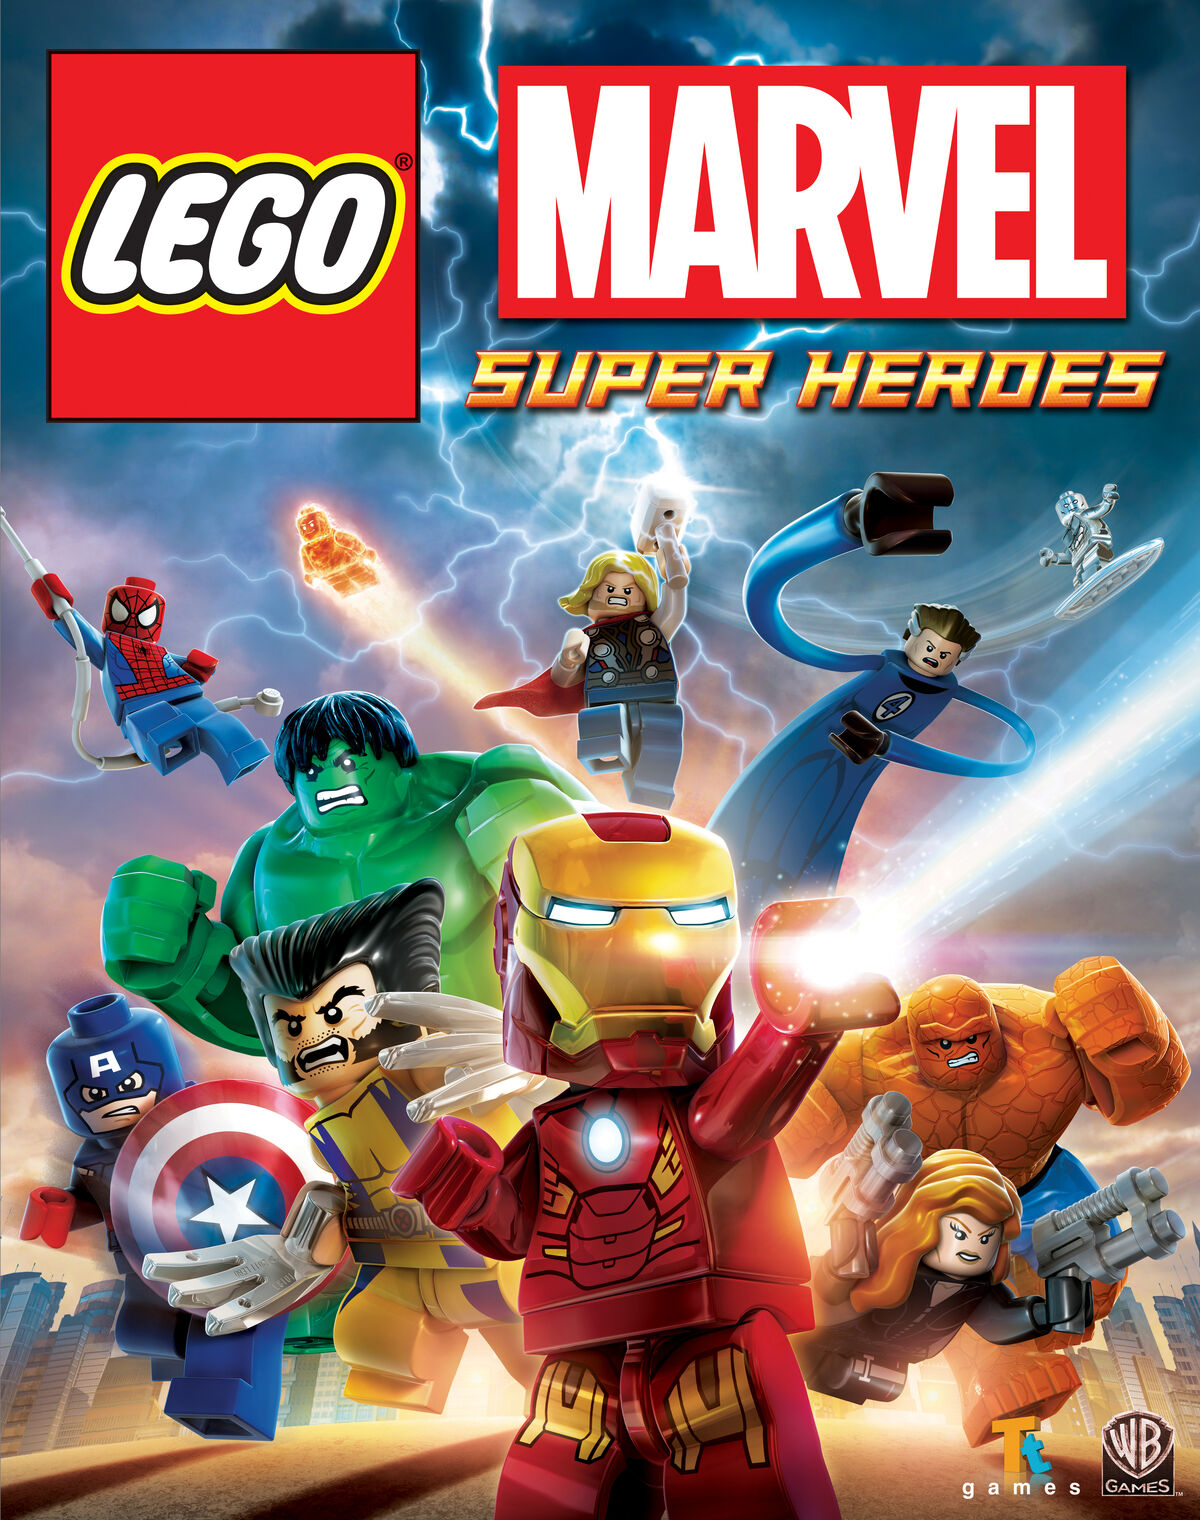 Marvel Heroes (video game) - Wikipedia